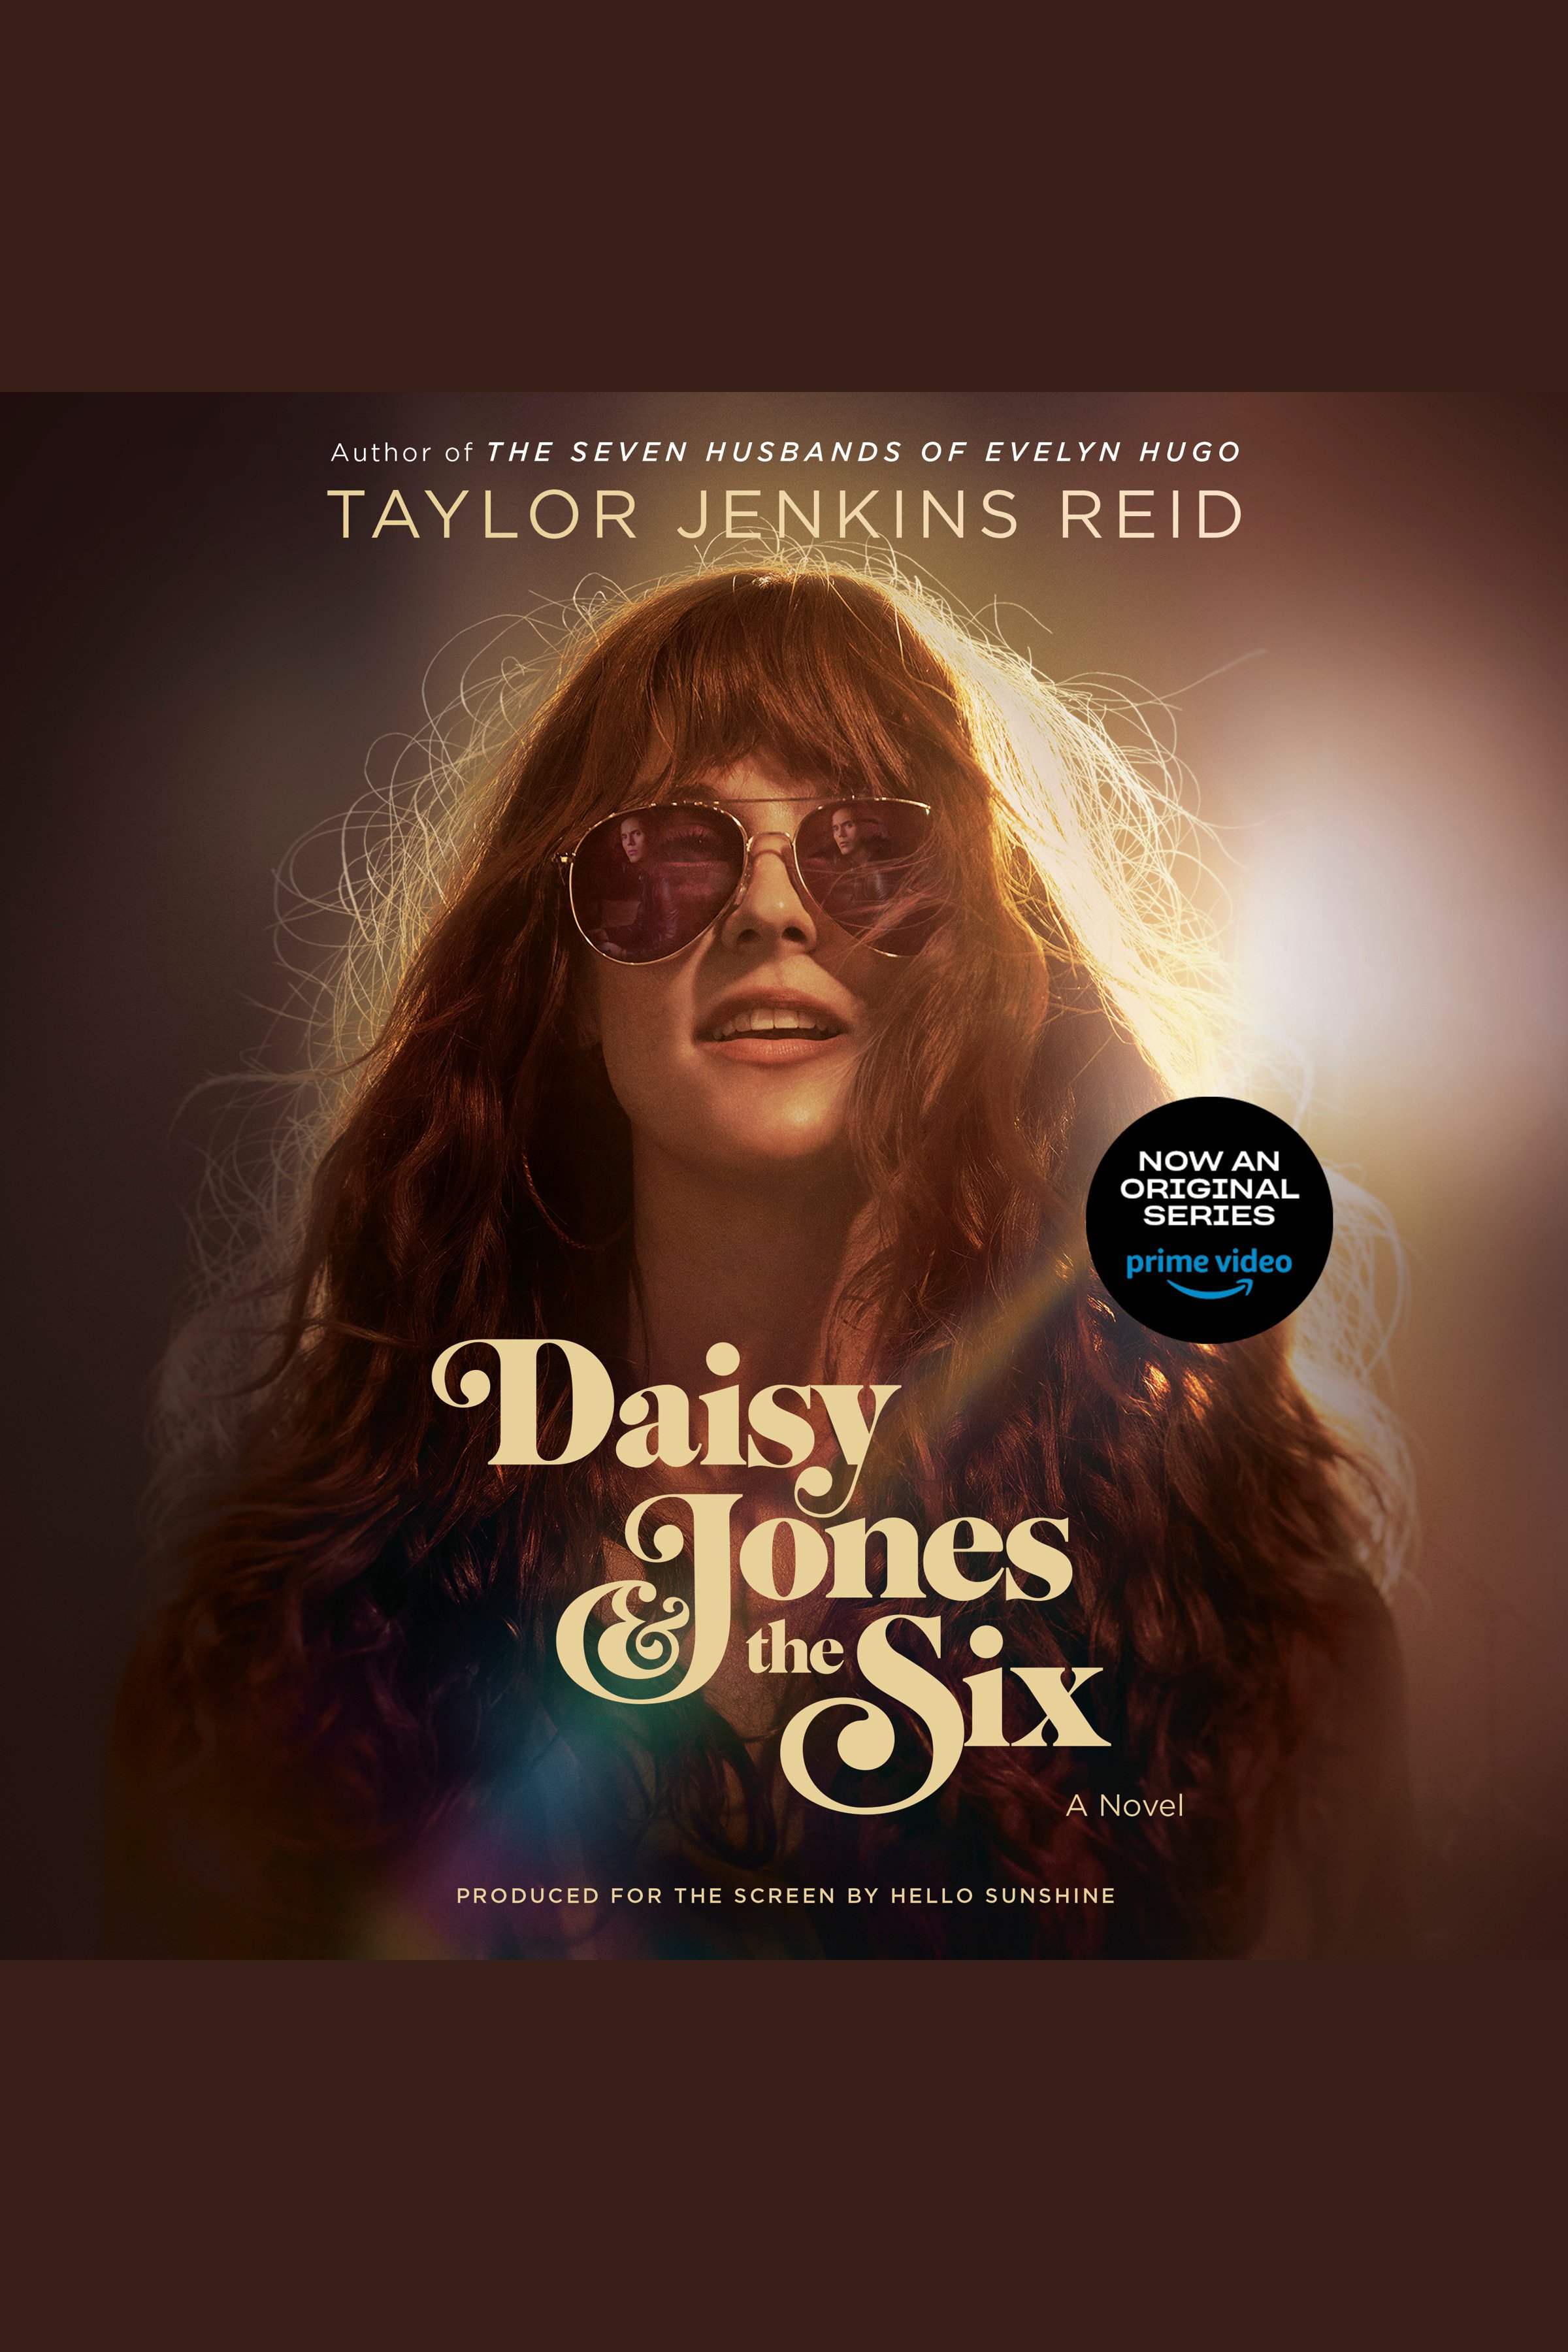 Daisy Jones & the Six cover image